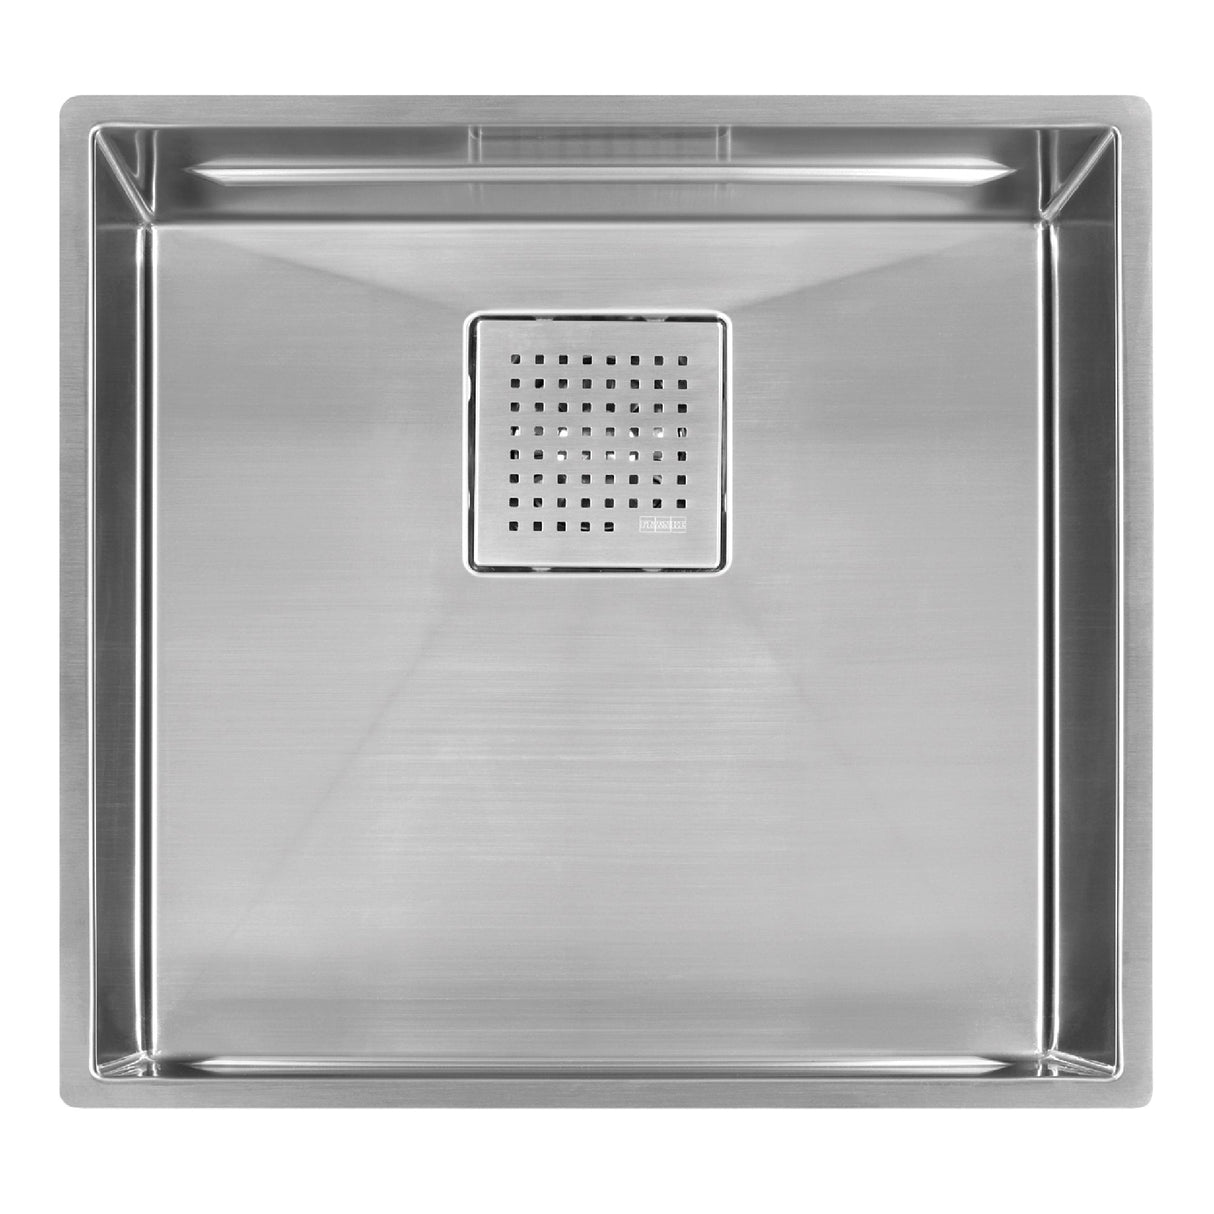 FRANKE PKX11018 Peak 19-in. x 18-in. 16 Gauge Stainless Steel Undermount Single Bowl Kitchen Sink - PKX11018 In Diamond